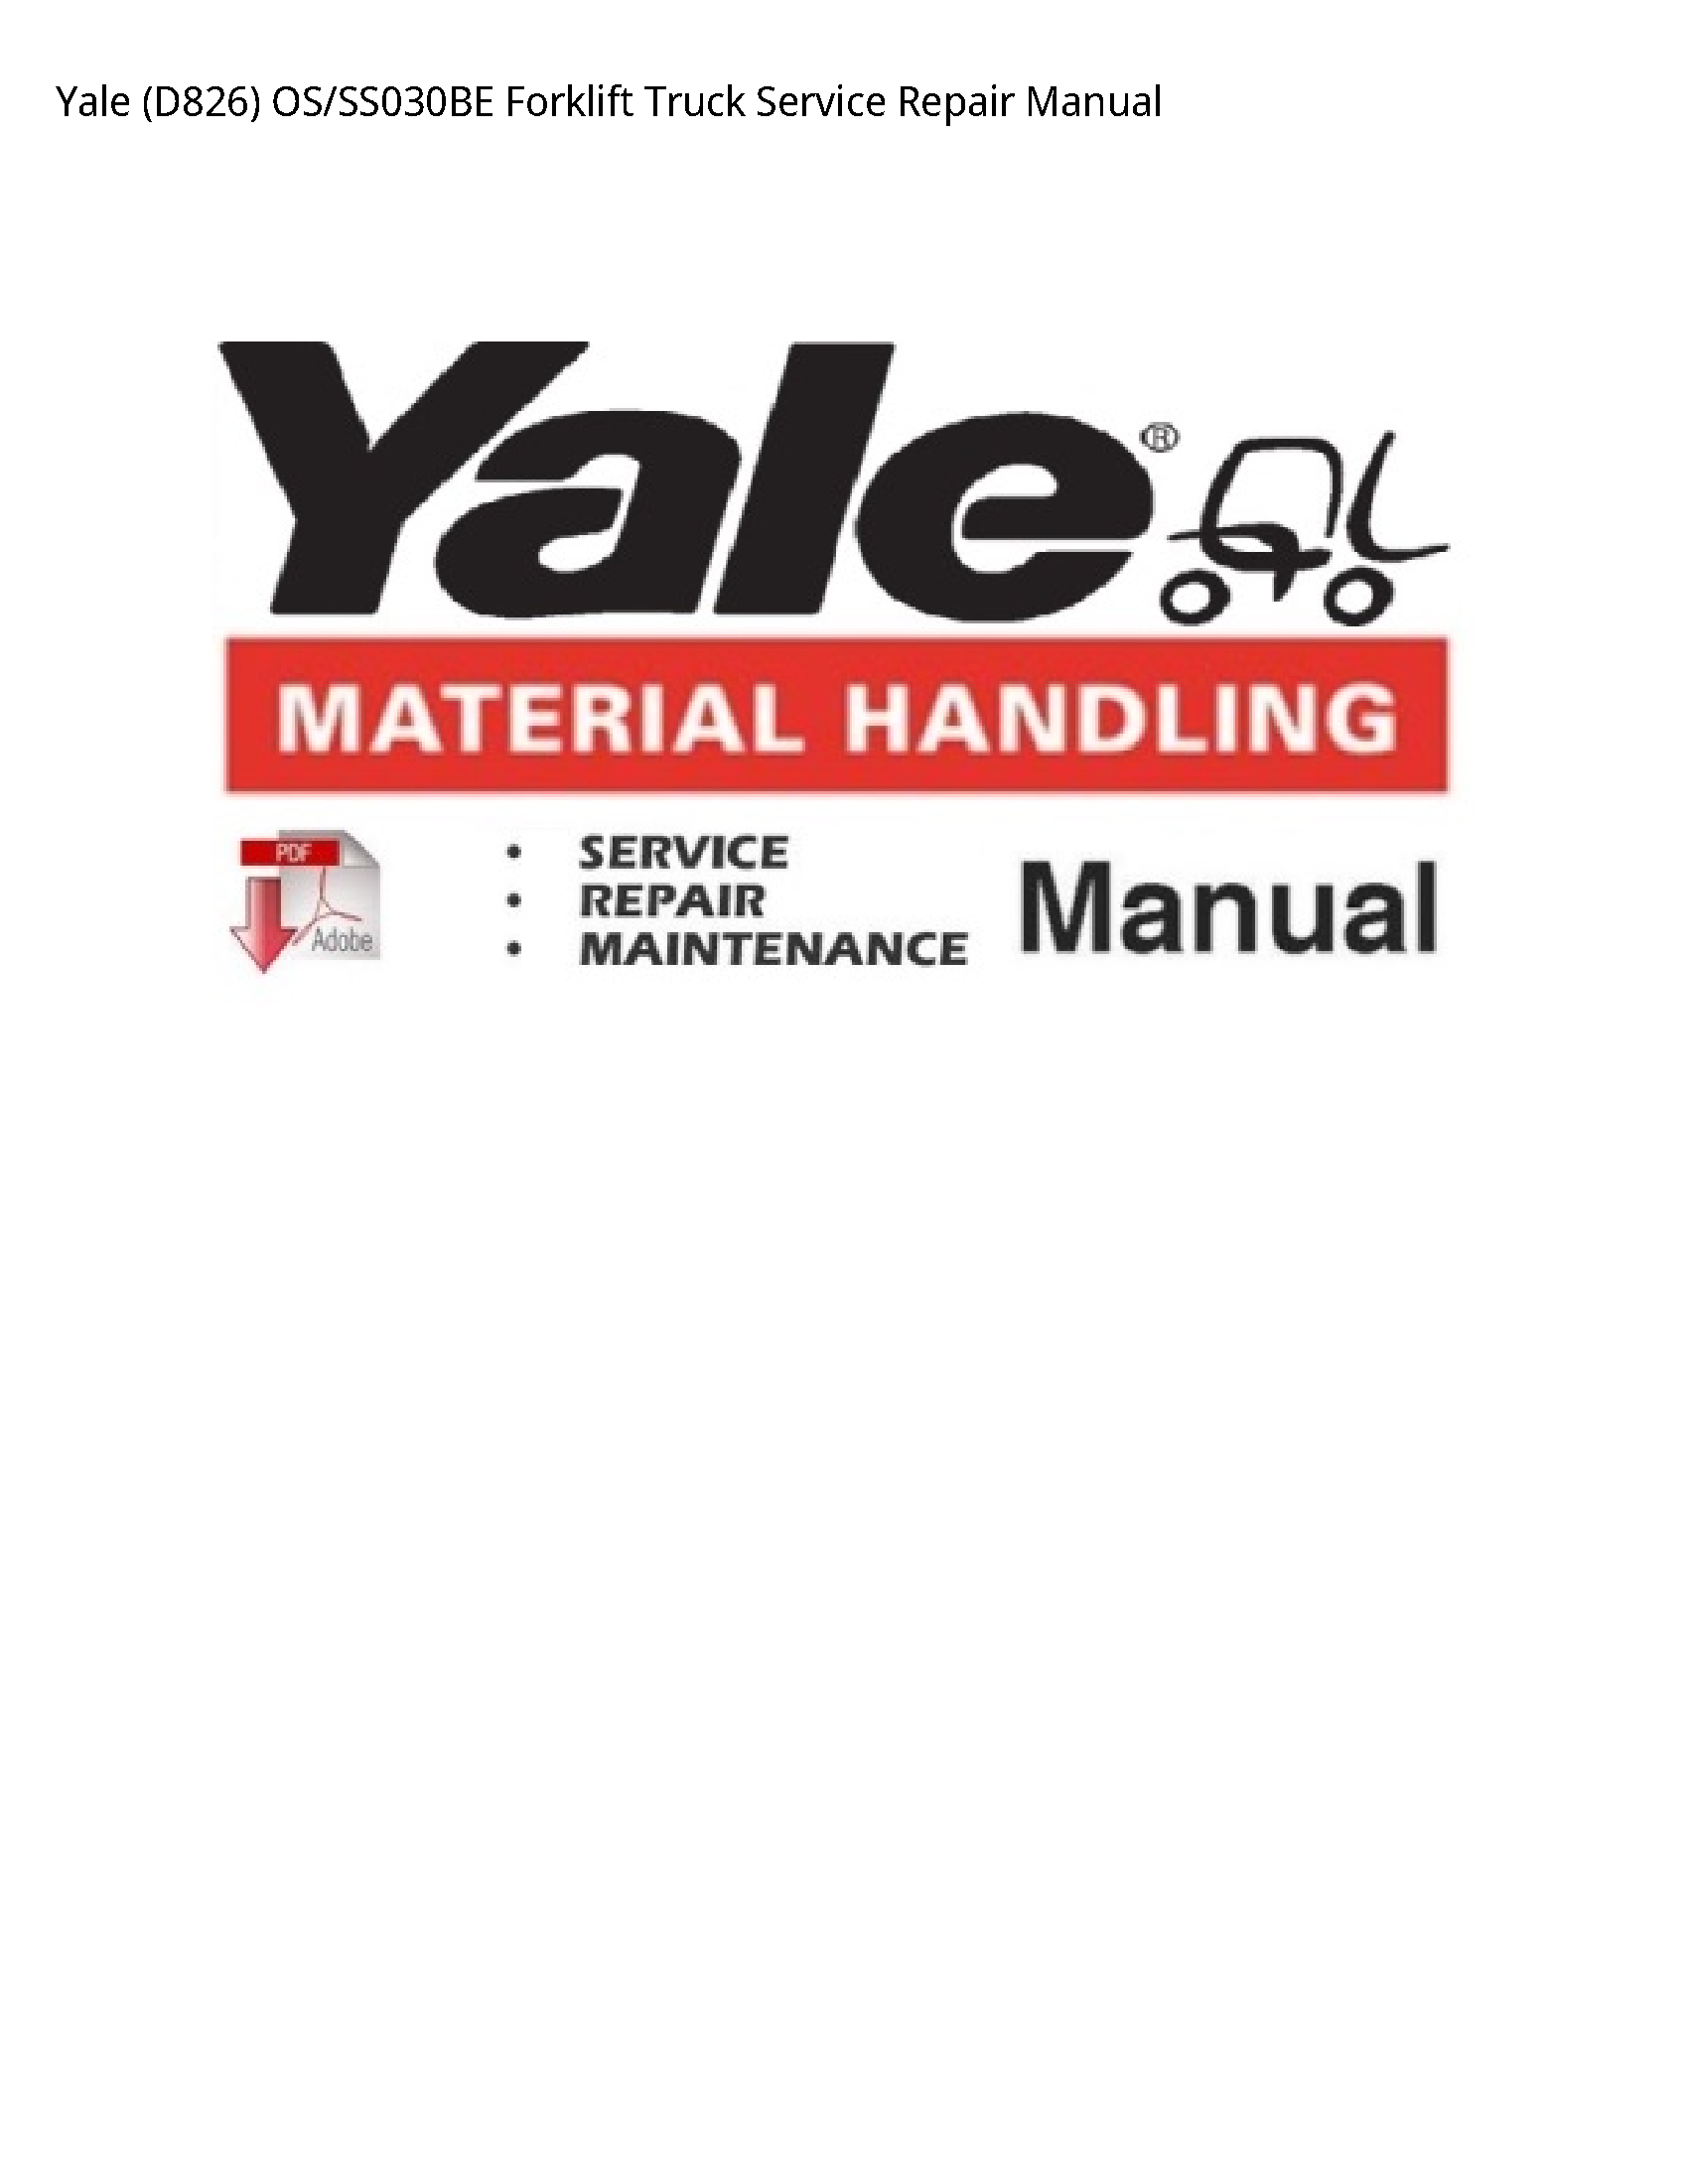 Yale (D826) Forklift Truck manual